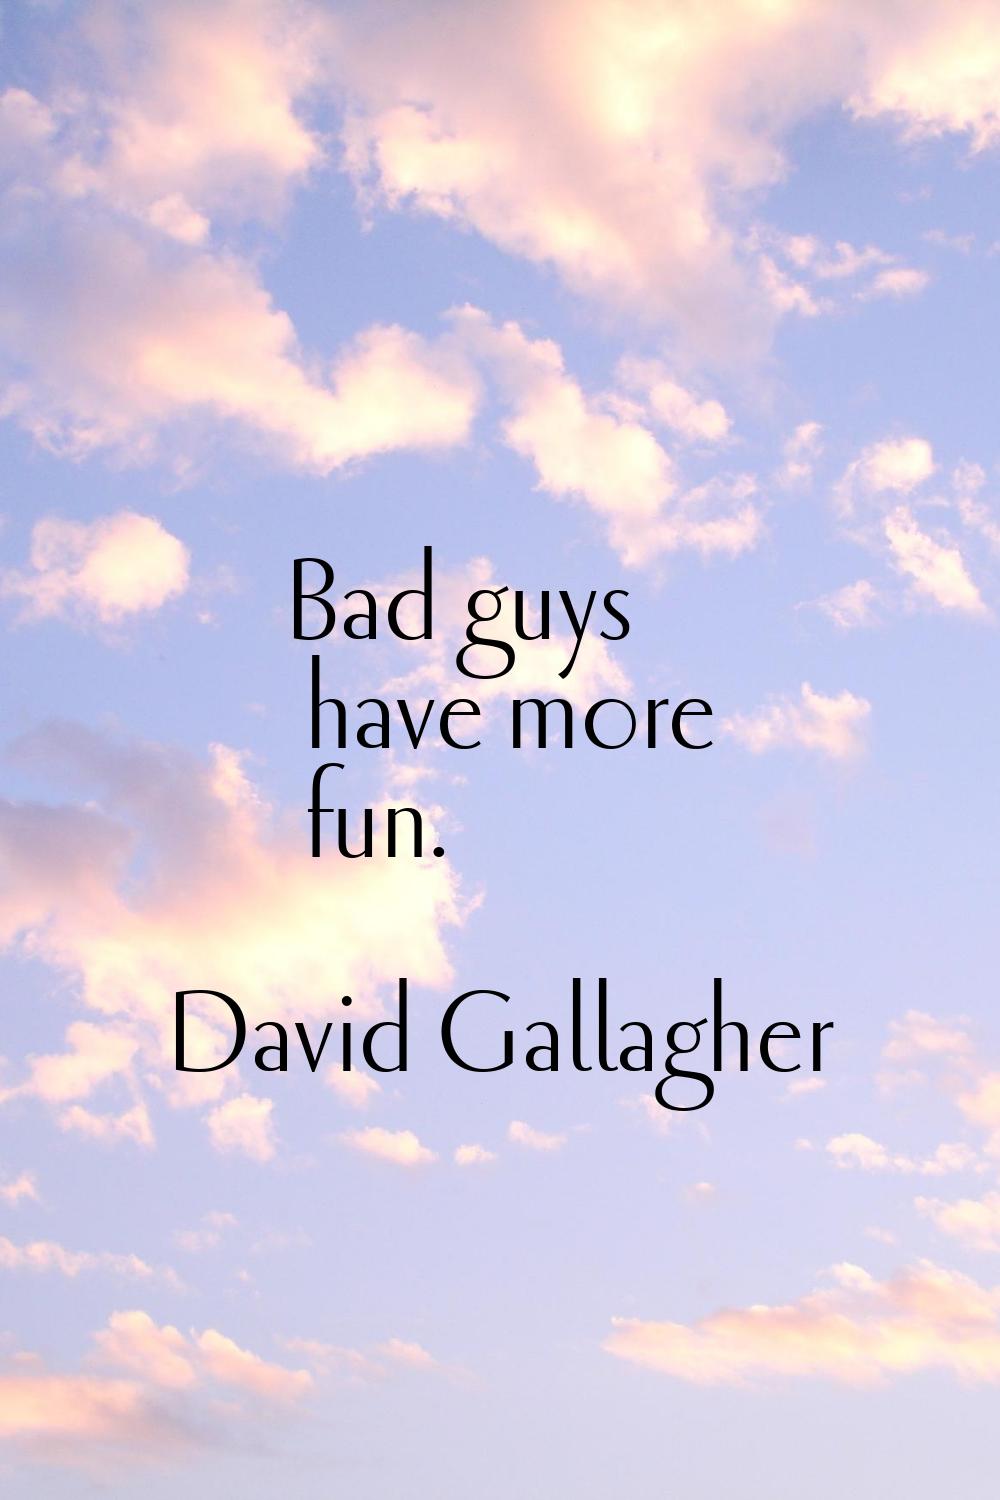 Bad guys have more fun.